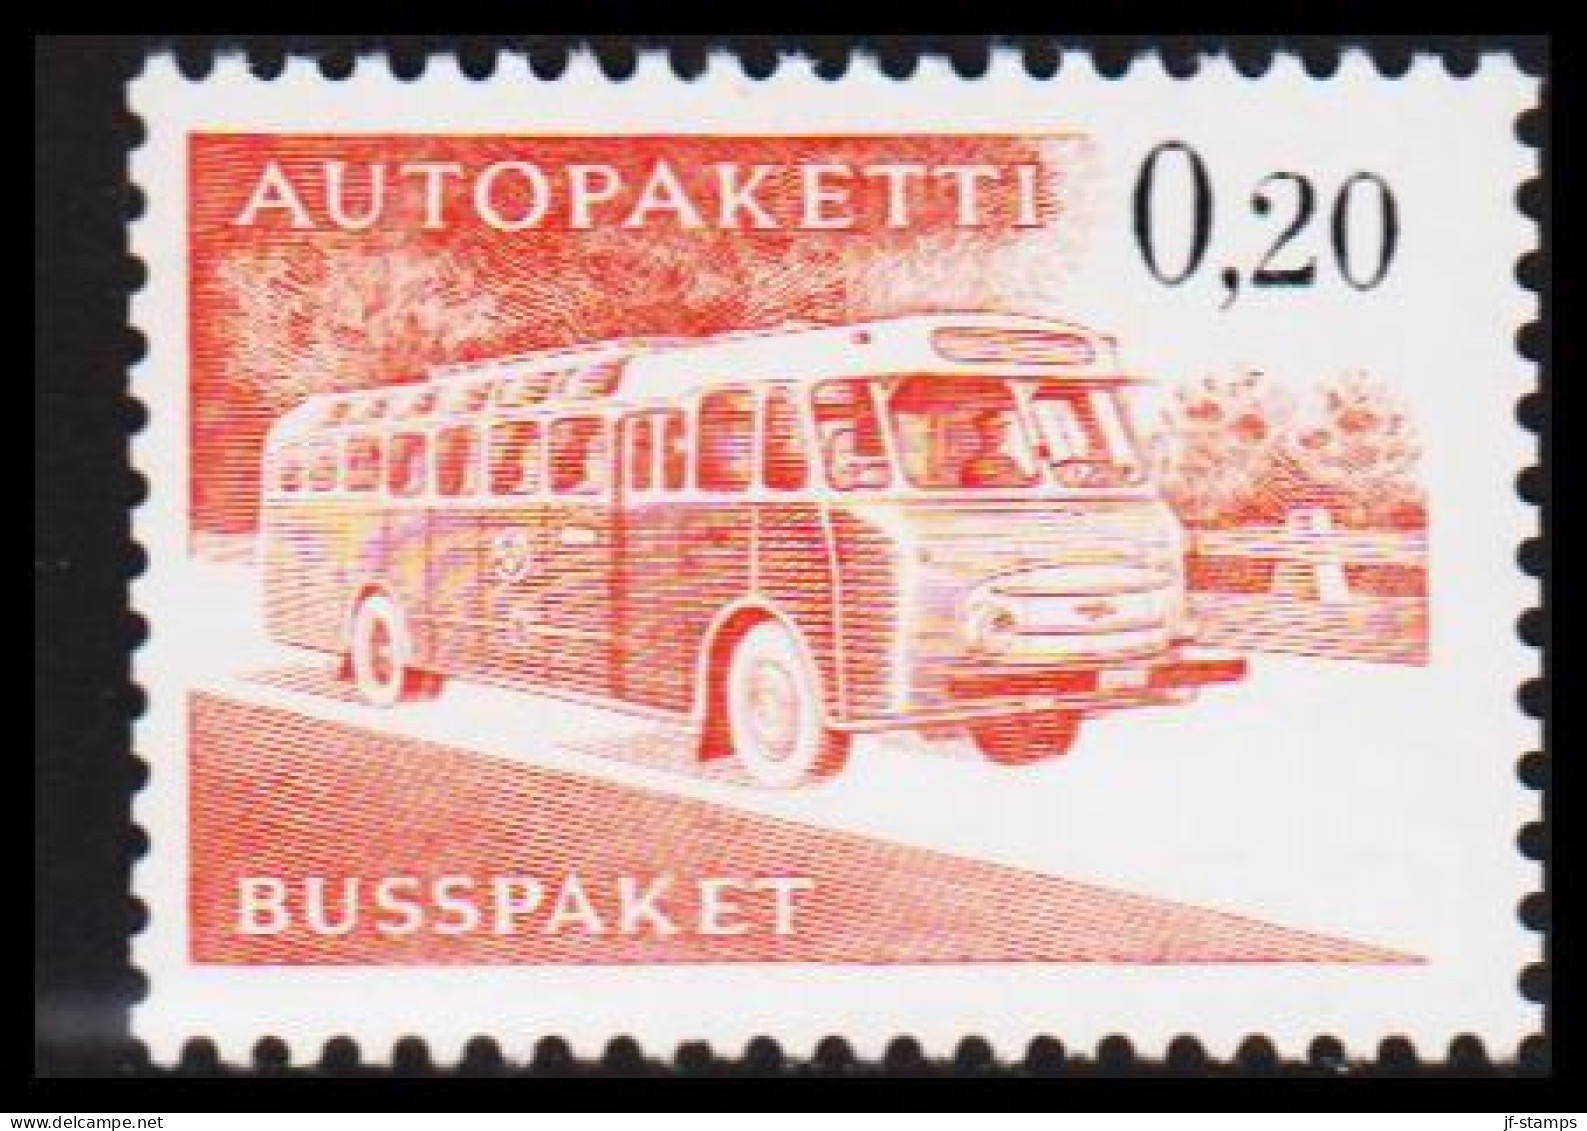 1963-1980. FINLAND. Mail Bus. 0,20 Mk. AUTOPAKETTI - BUSSPAKET Never Hinged. Lumogen. Yell... (Michel AP 11y) - JF535628 - Pacchi Tramite Autobus